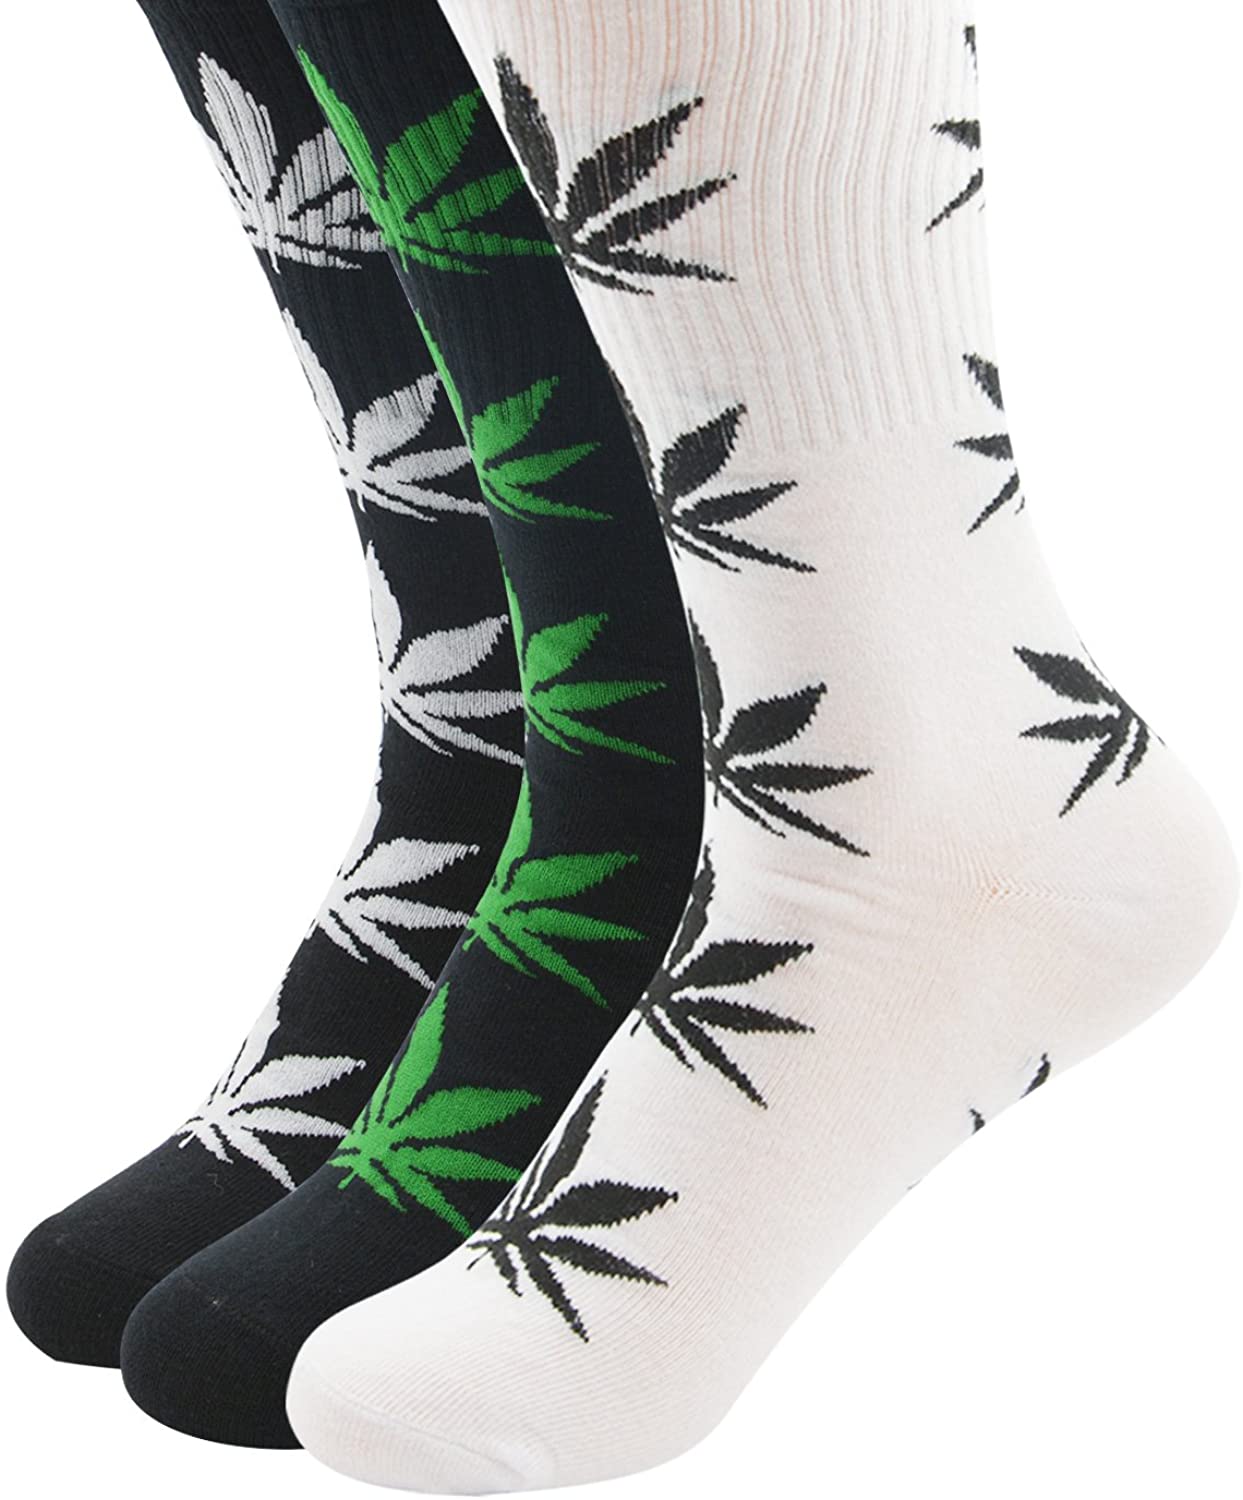 Zando Marijuana Weed Leaf Printed Cotton Unisex Colorful Sports Comfort High Crew Socks